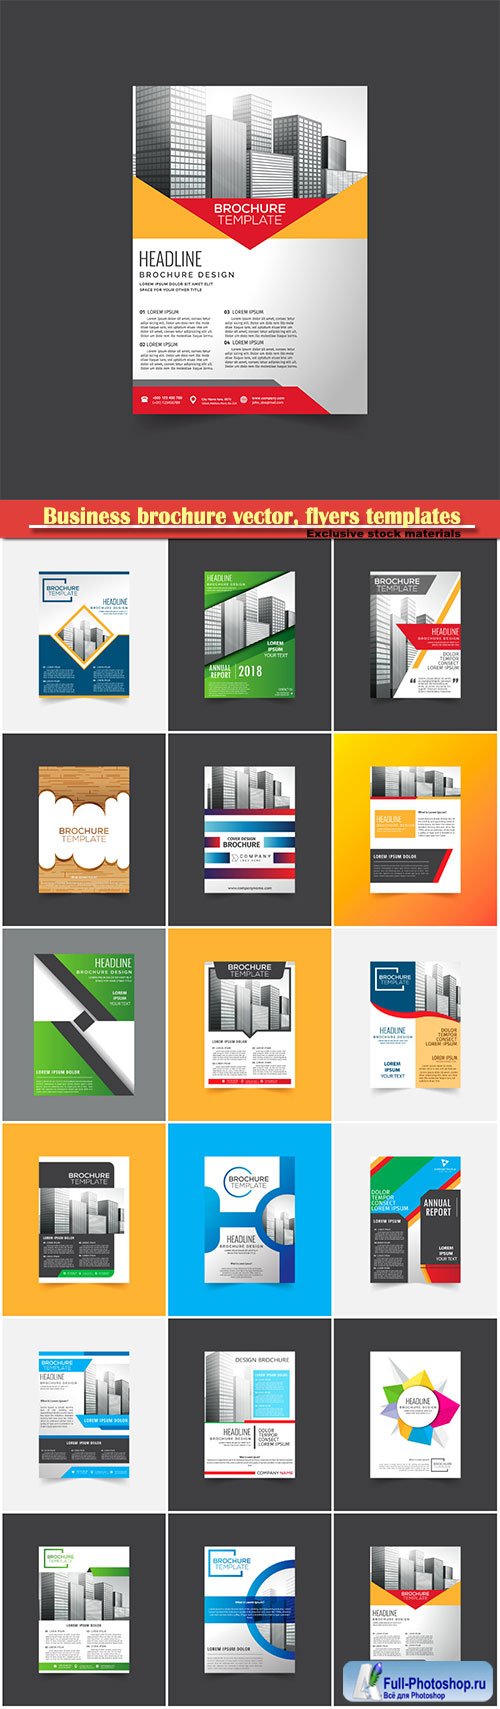 Business brochure vector, flyers templates, report cover design # 86